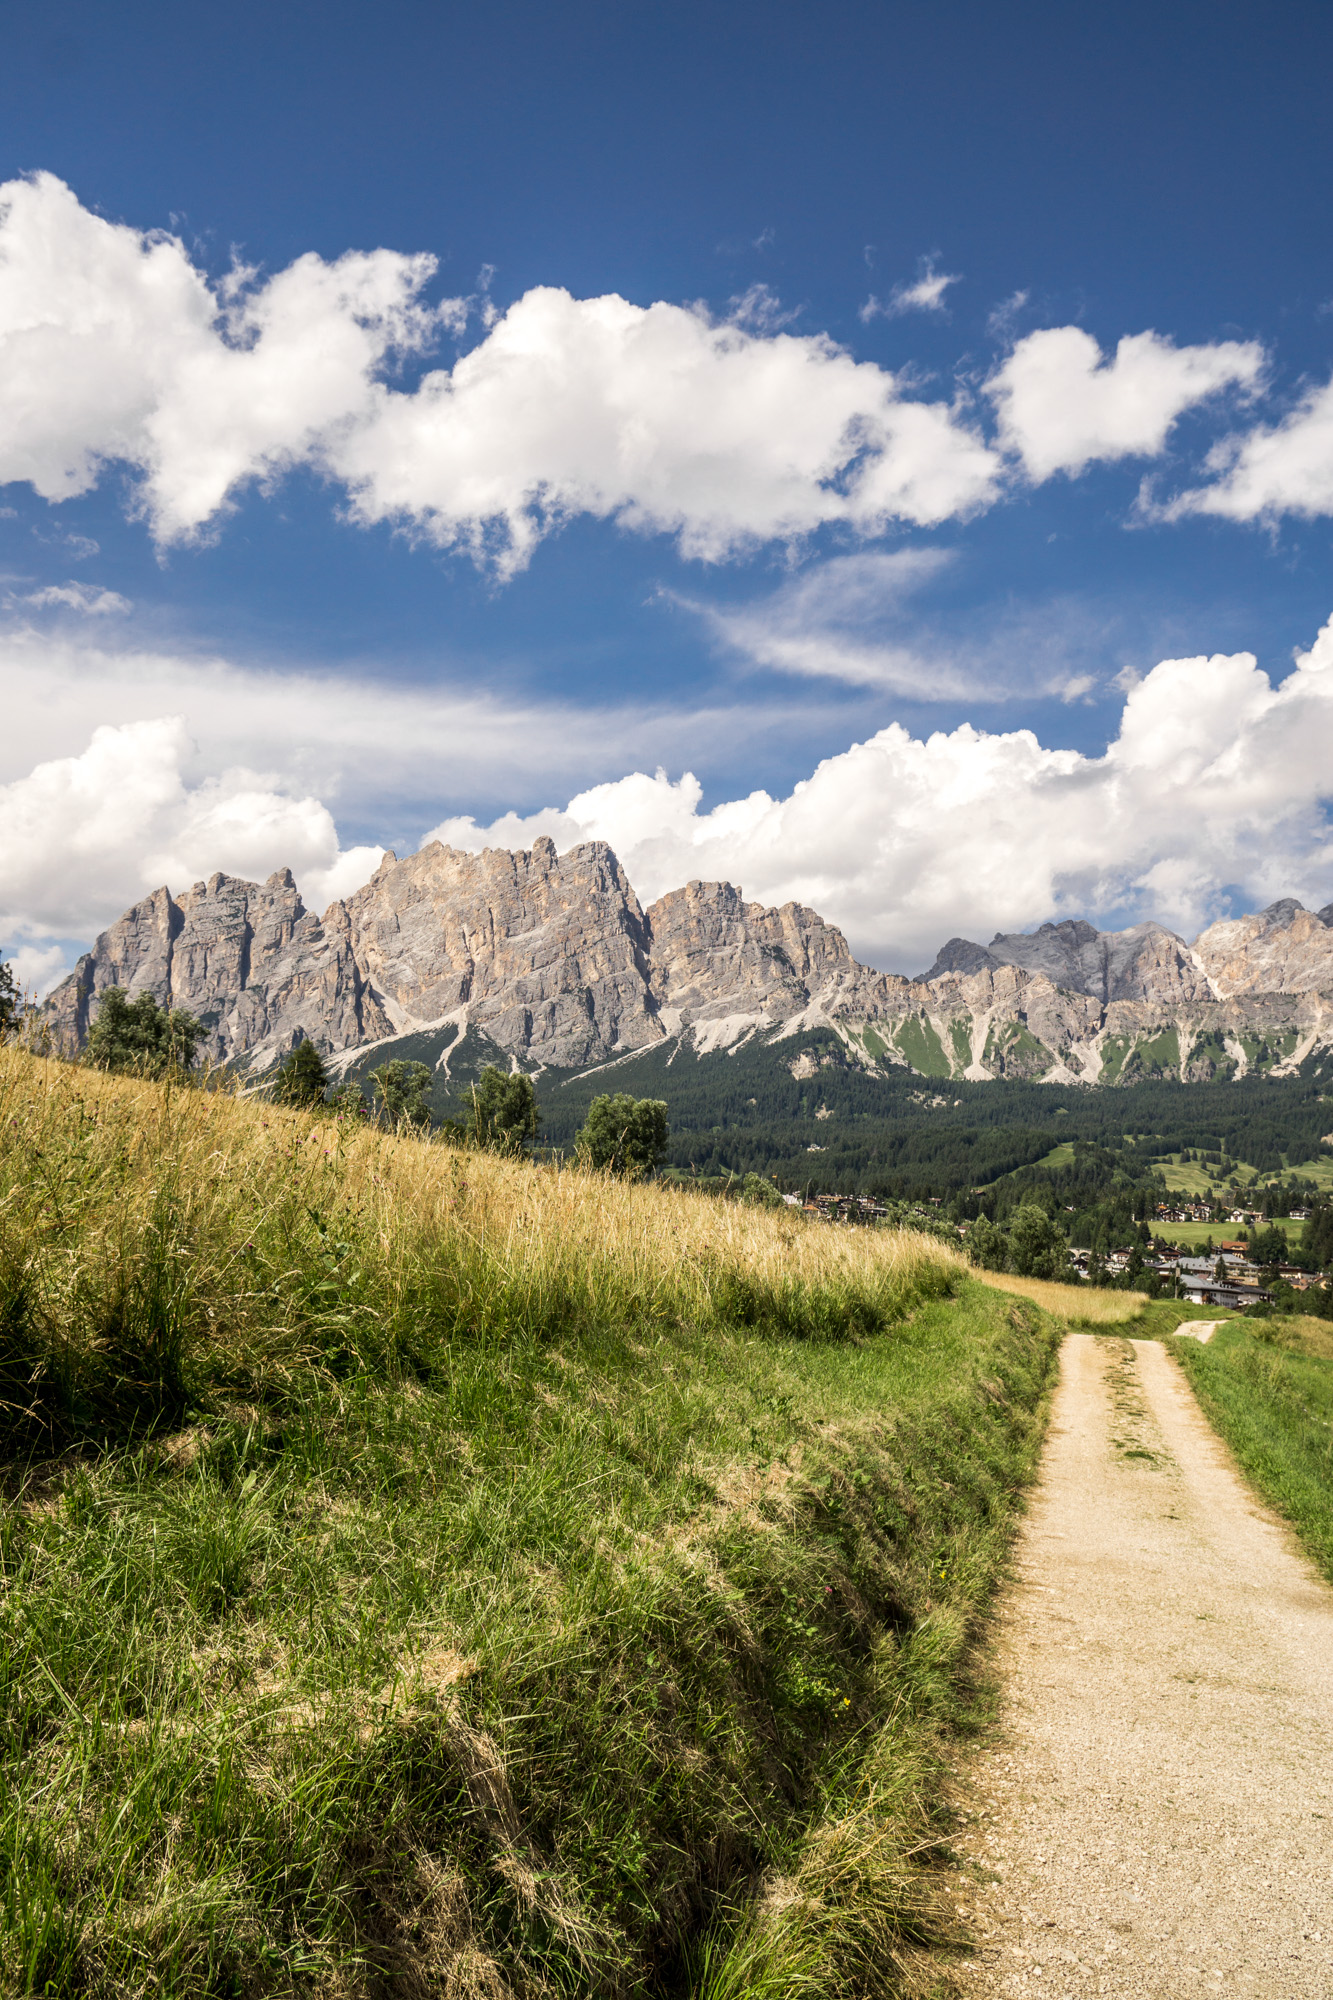 France/Italy roadtrip – Cortina d’Ampezzo